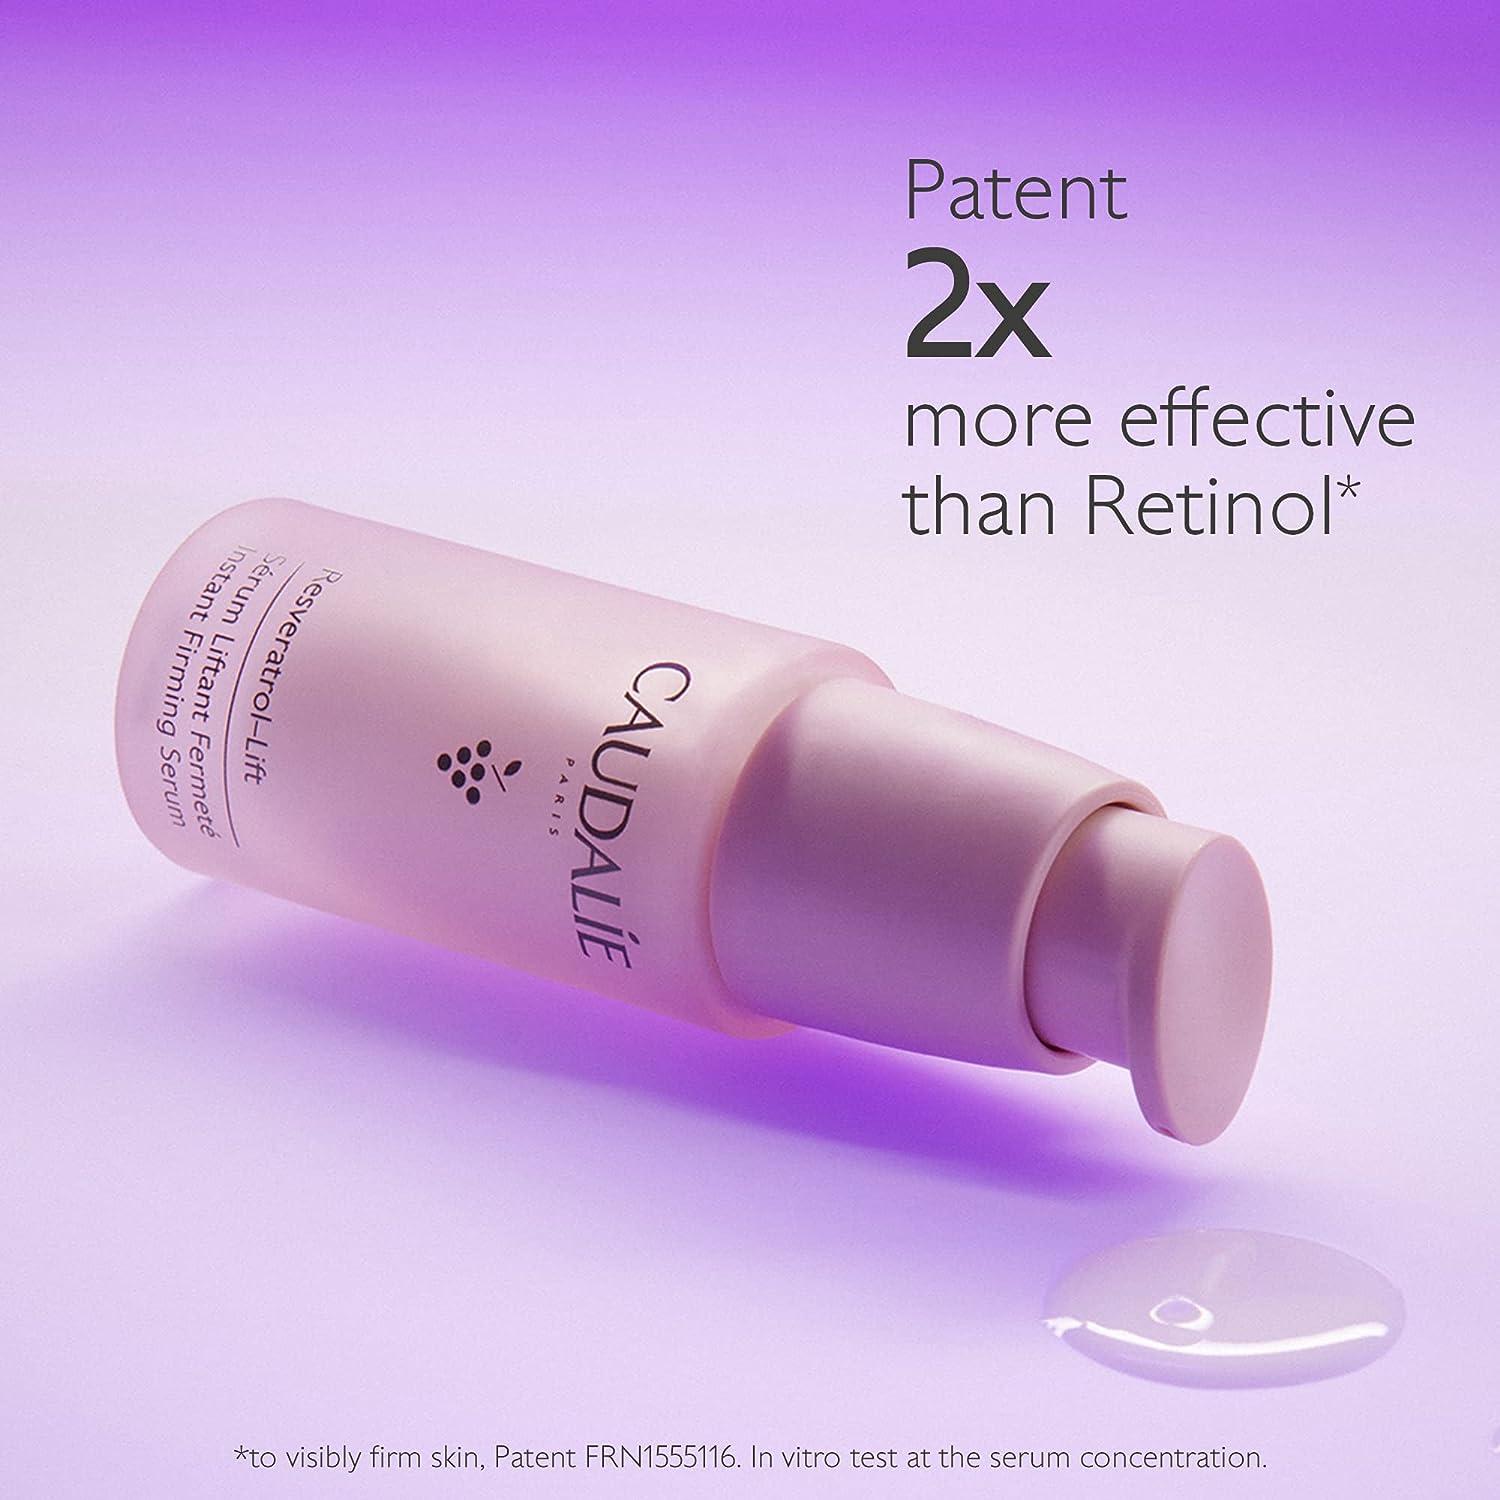 Caudalie Resveratrol Lift Instant Firming Retinol Alternative Serum -  Anti-Aging